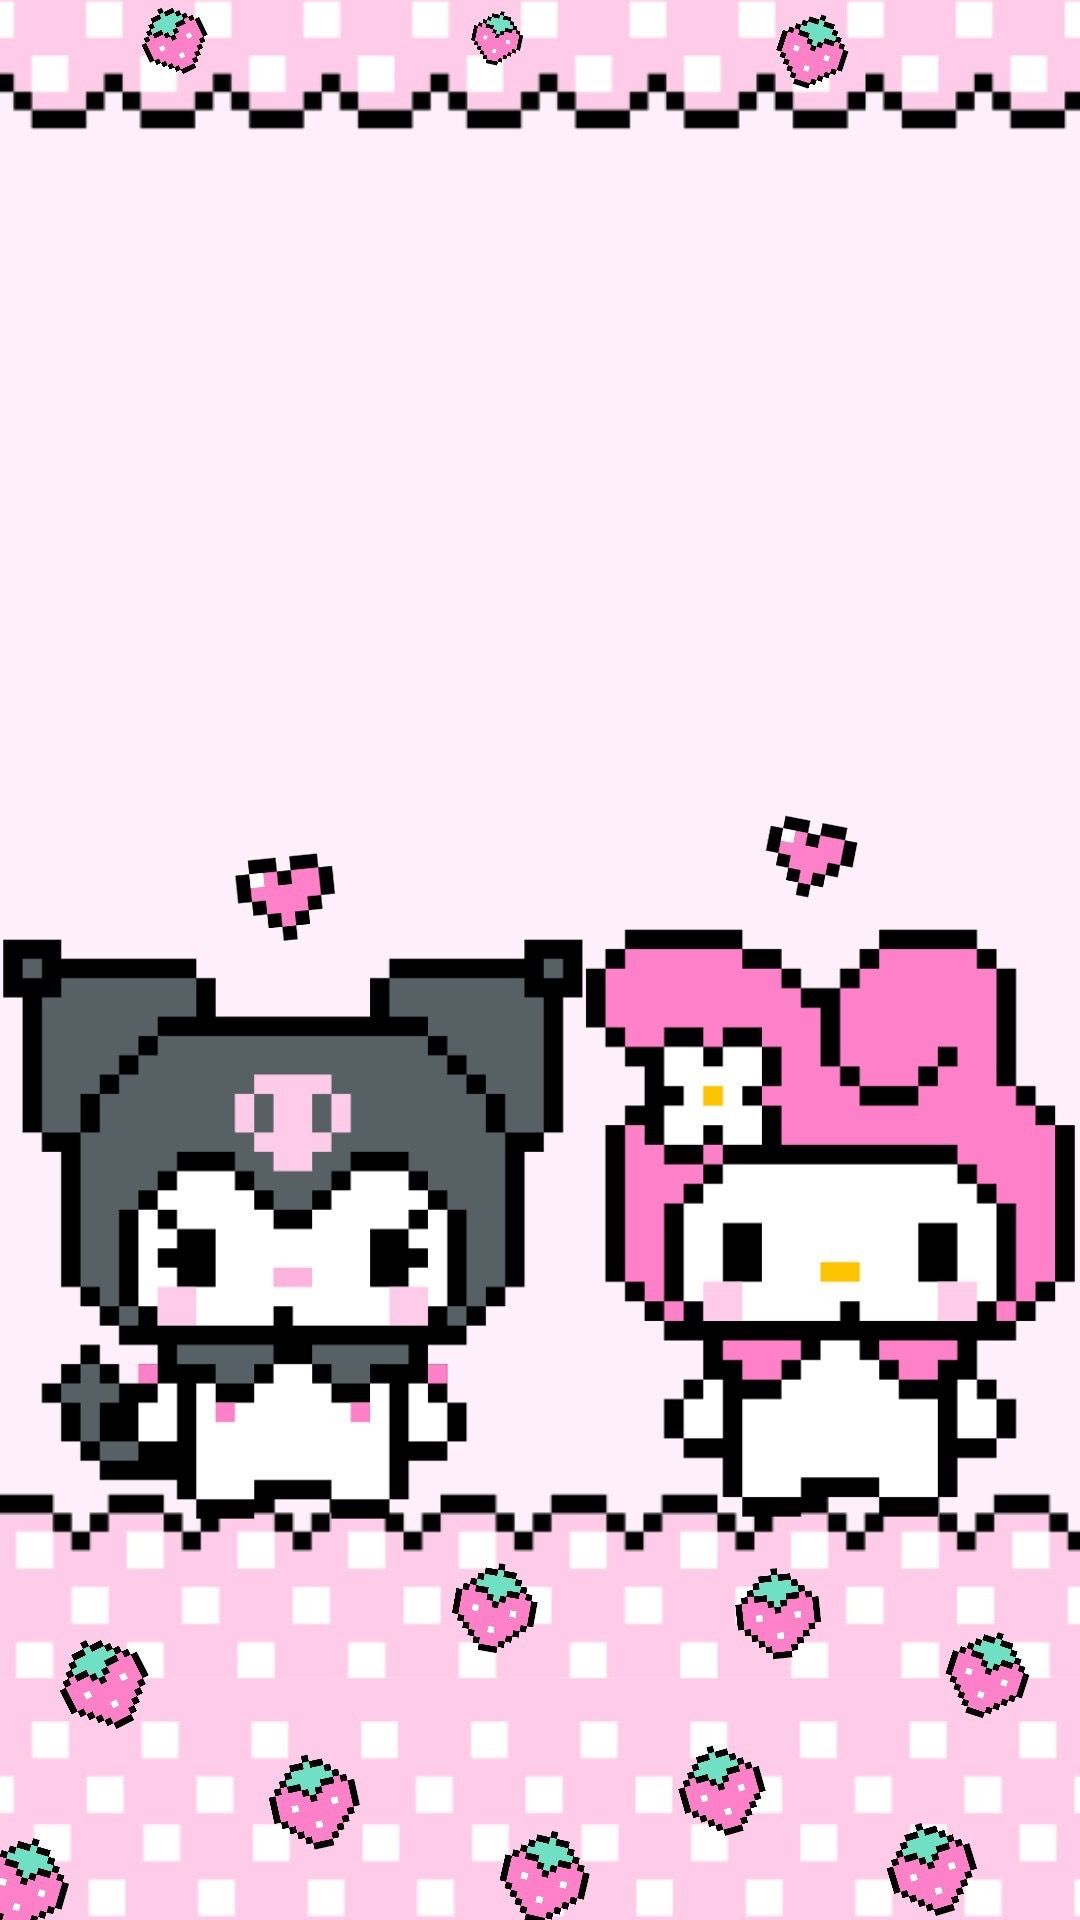 A cute pixel art of two kittens - Hello Kitty, Sanrio, Kuromi